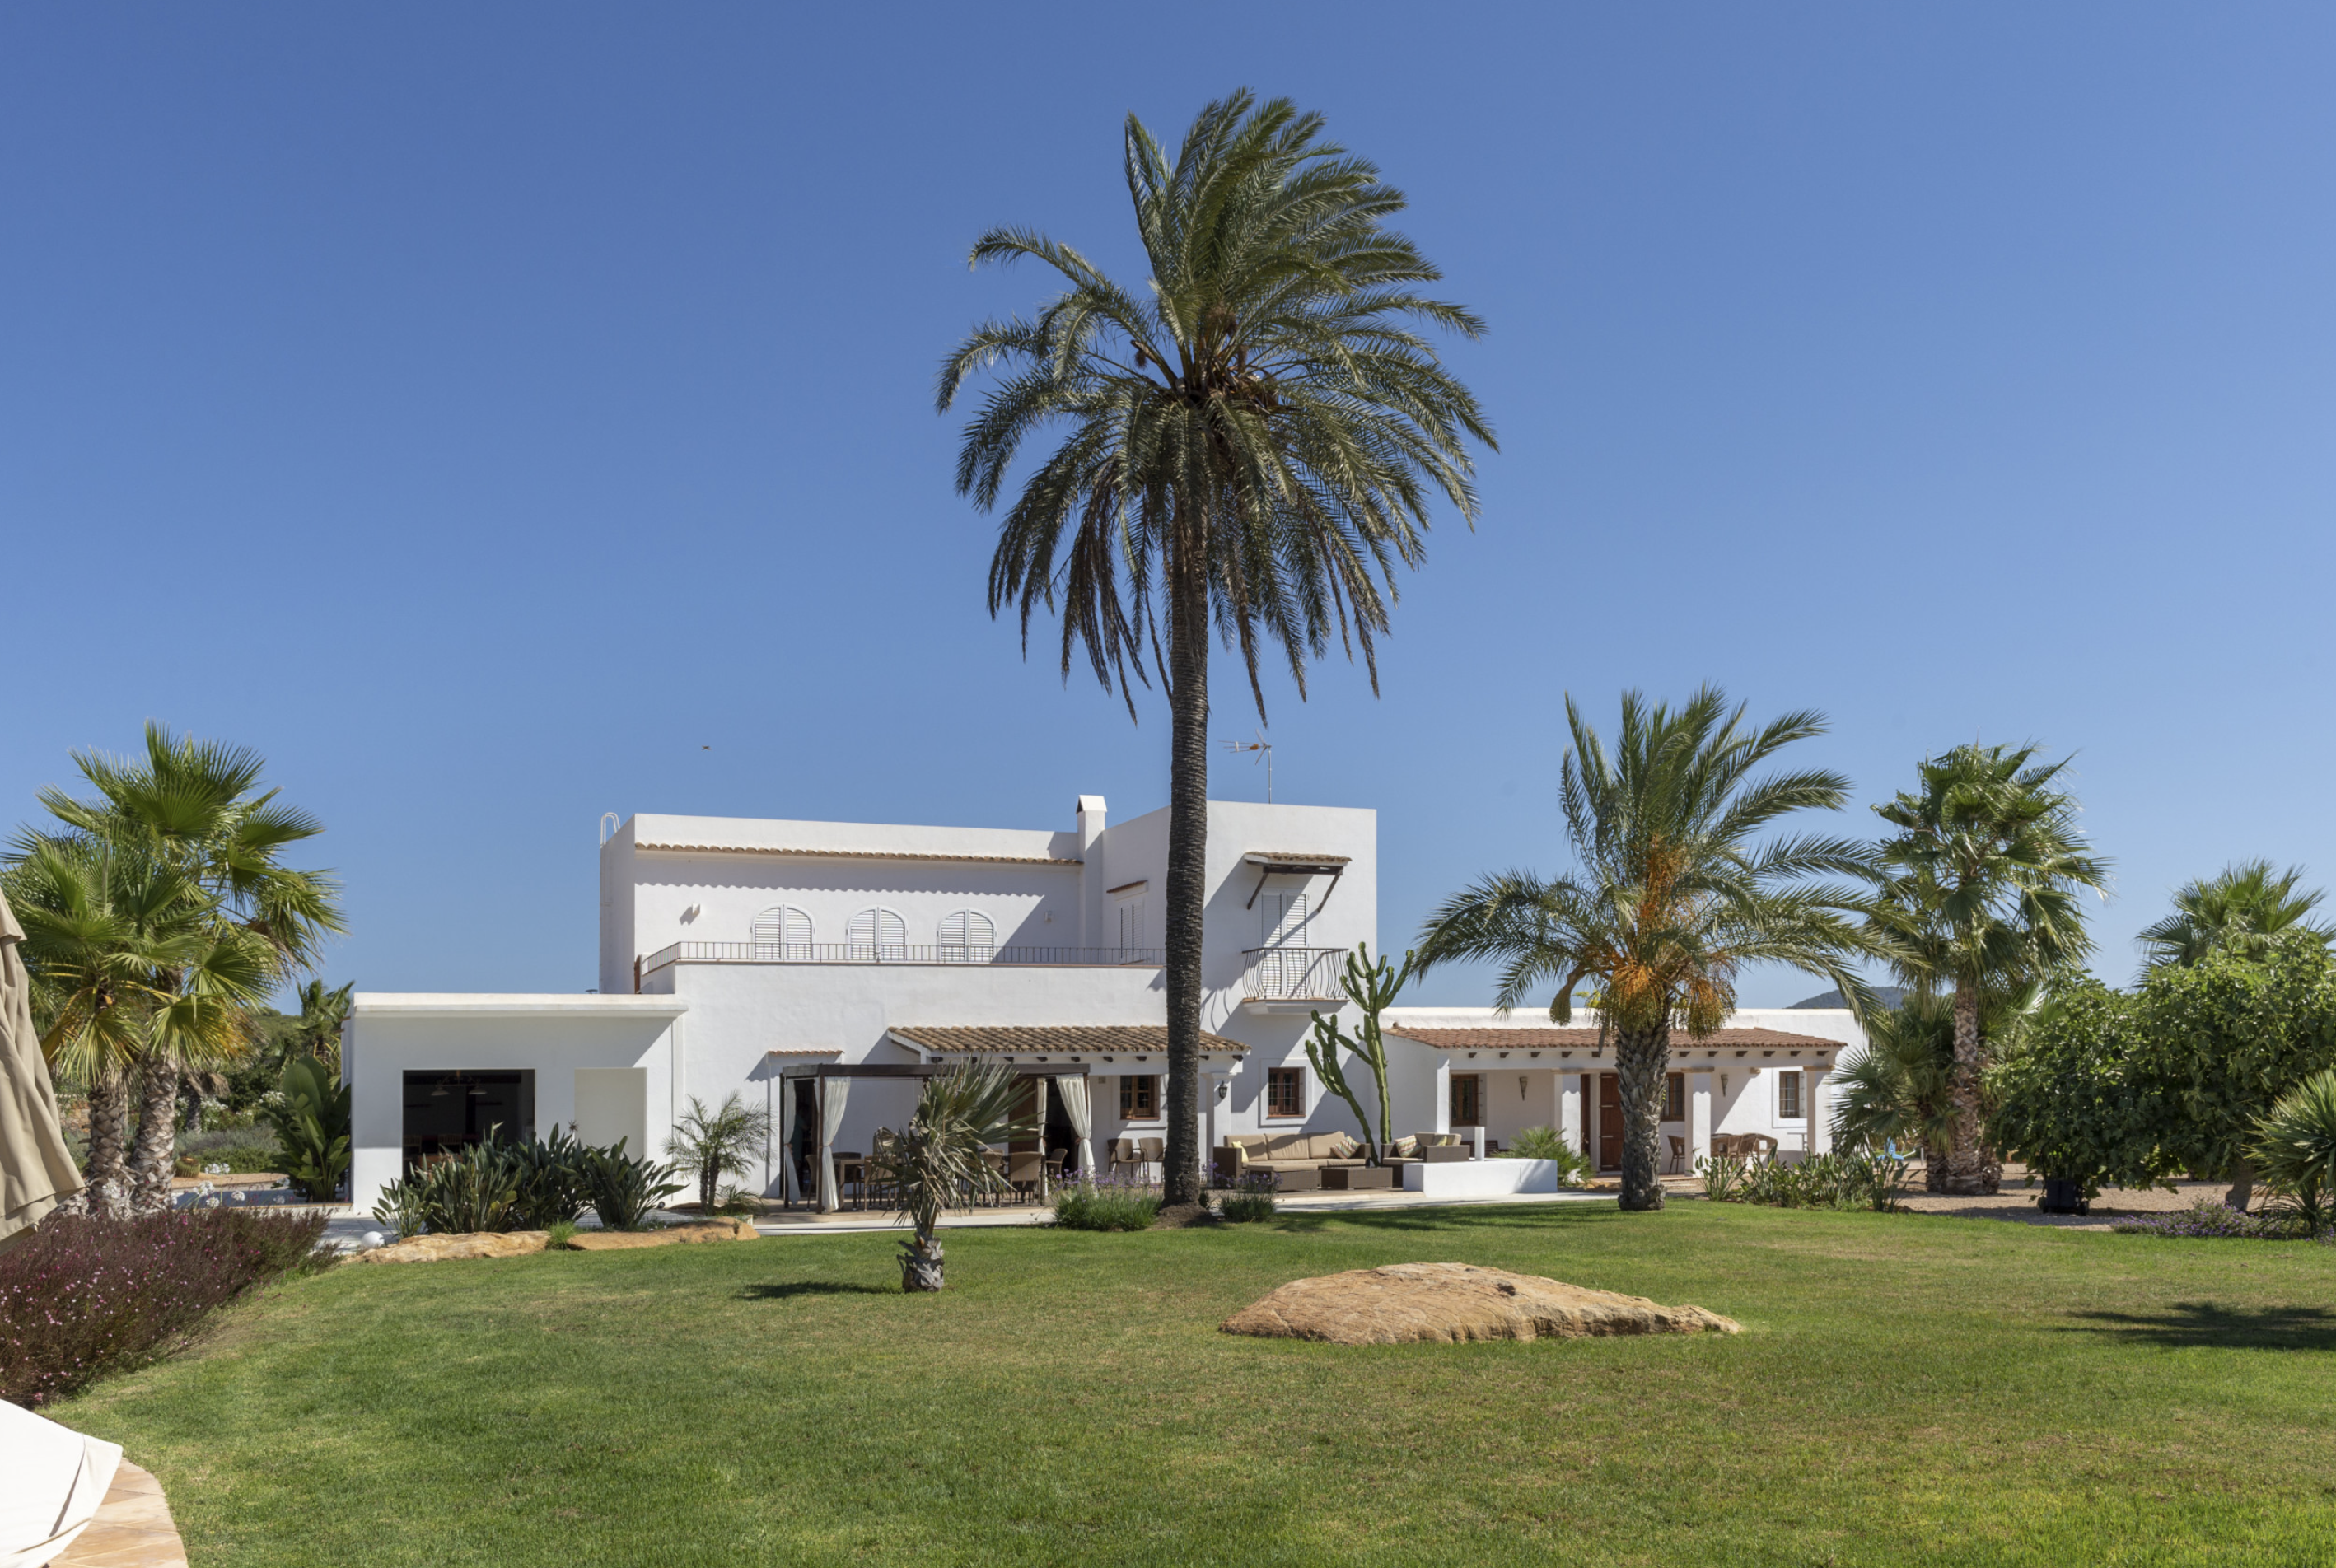 resa estates ibiza for rent villa santa eulalia 2021 can cosmi family house private pool house and grass.jpg